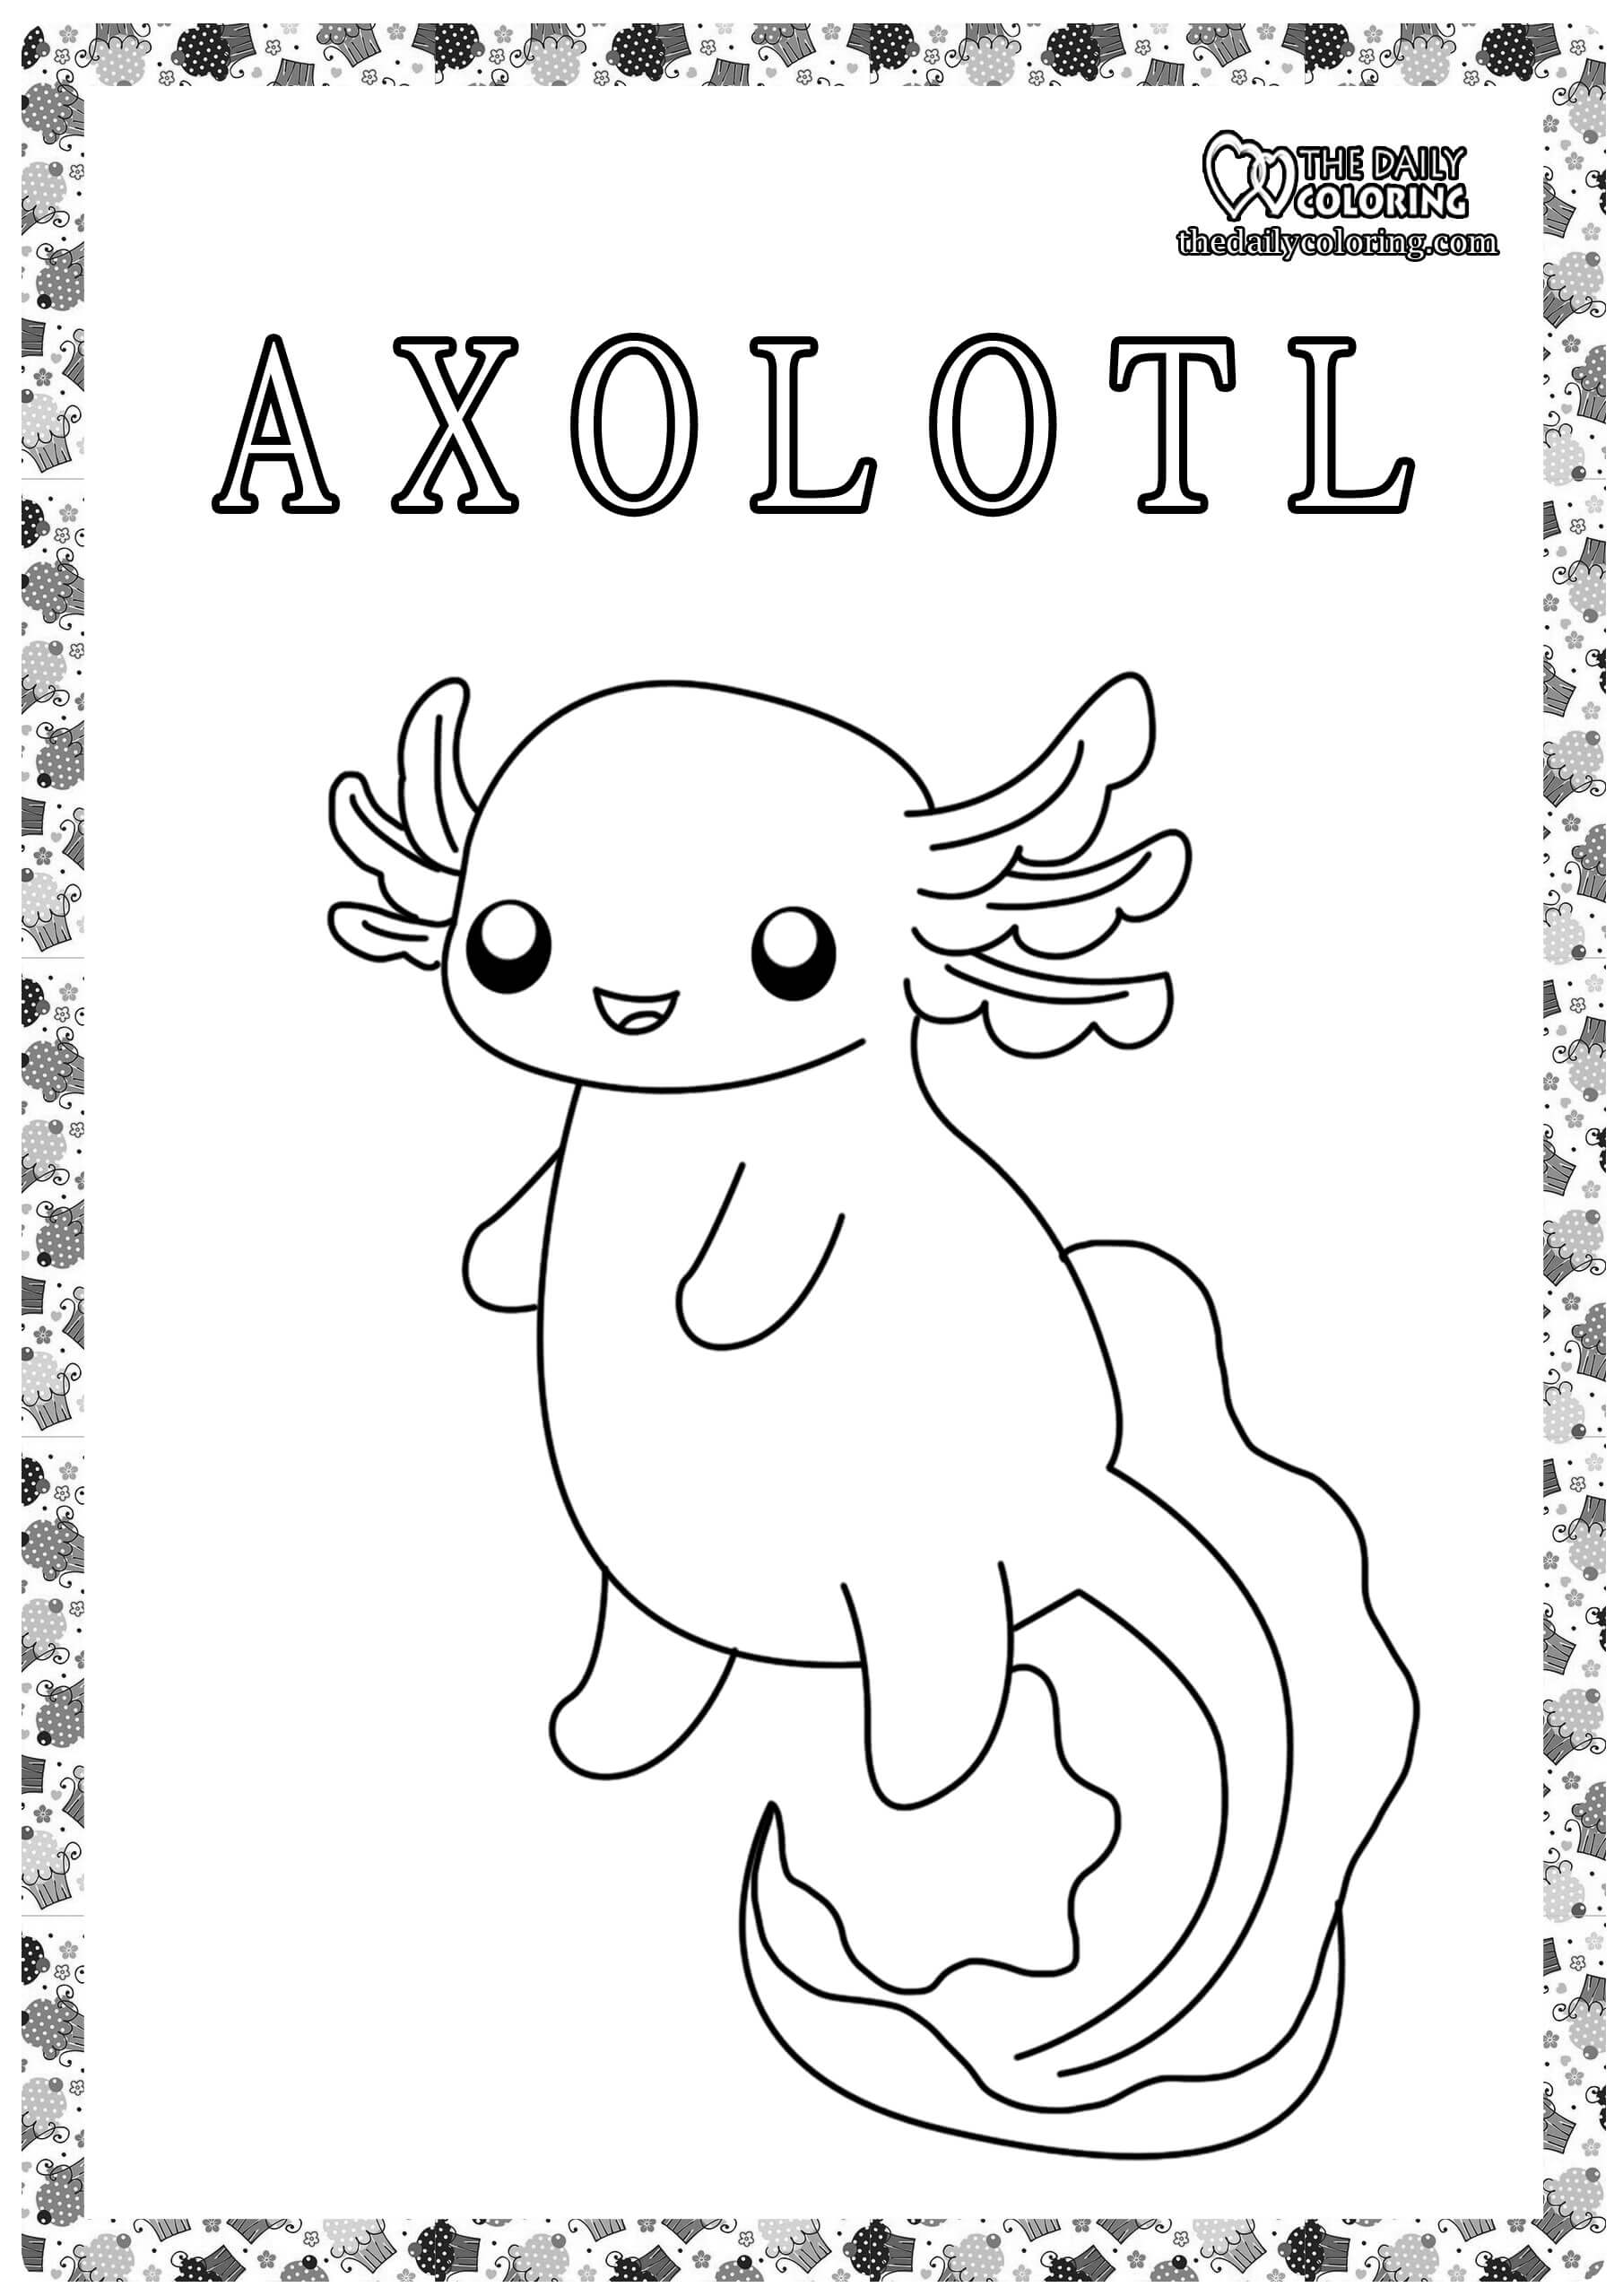 axolotl-coloring-page